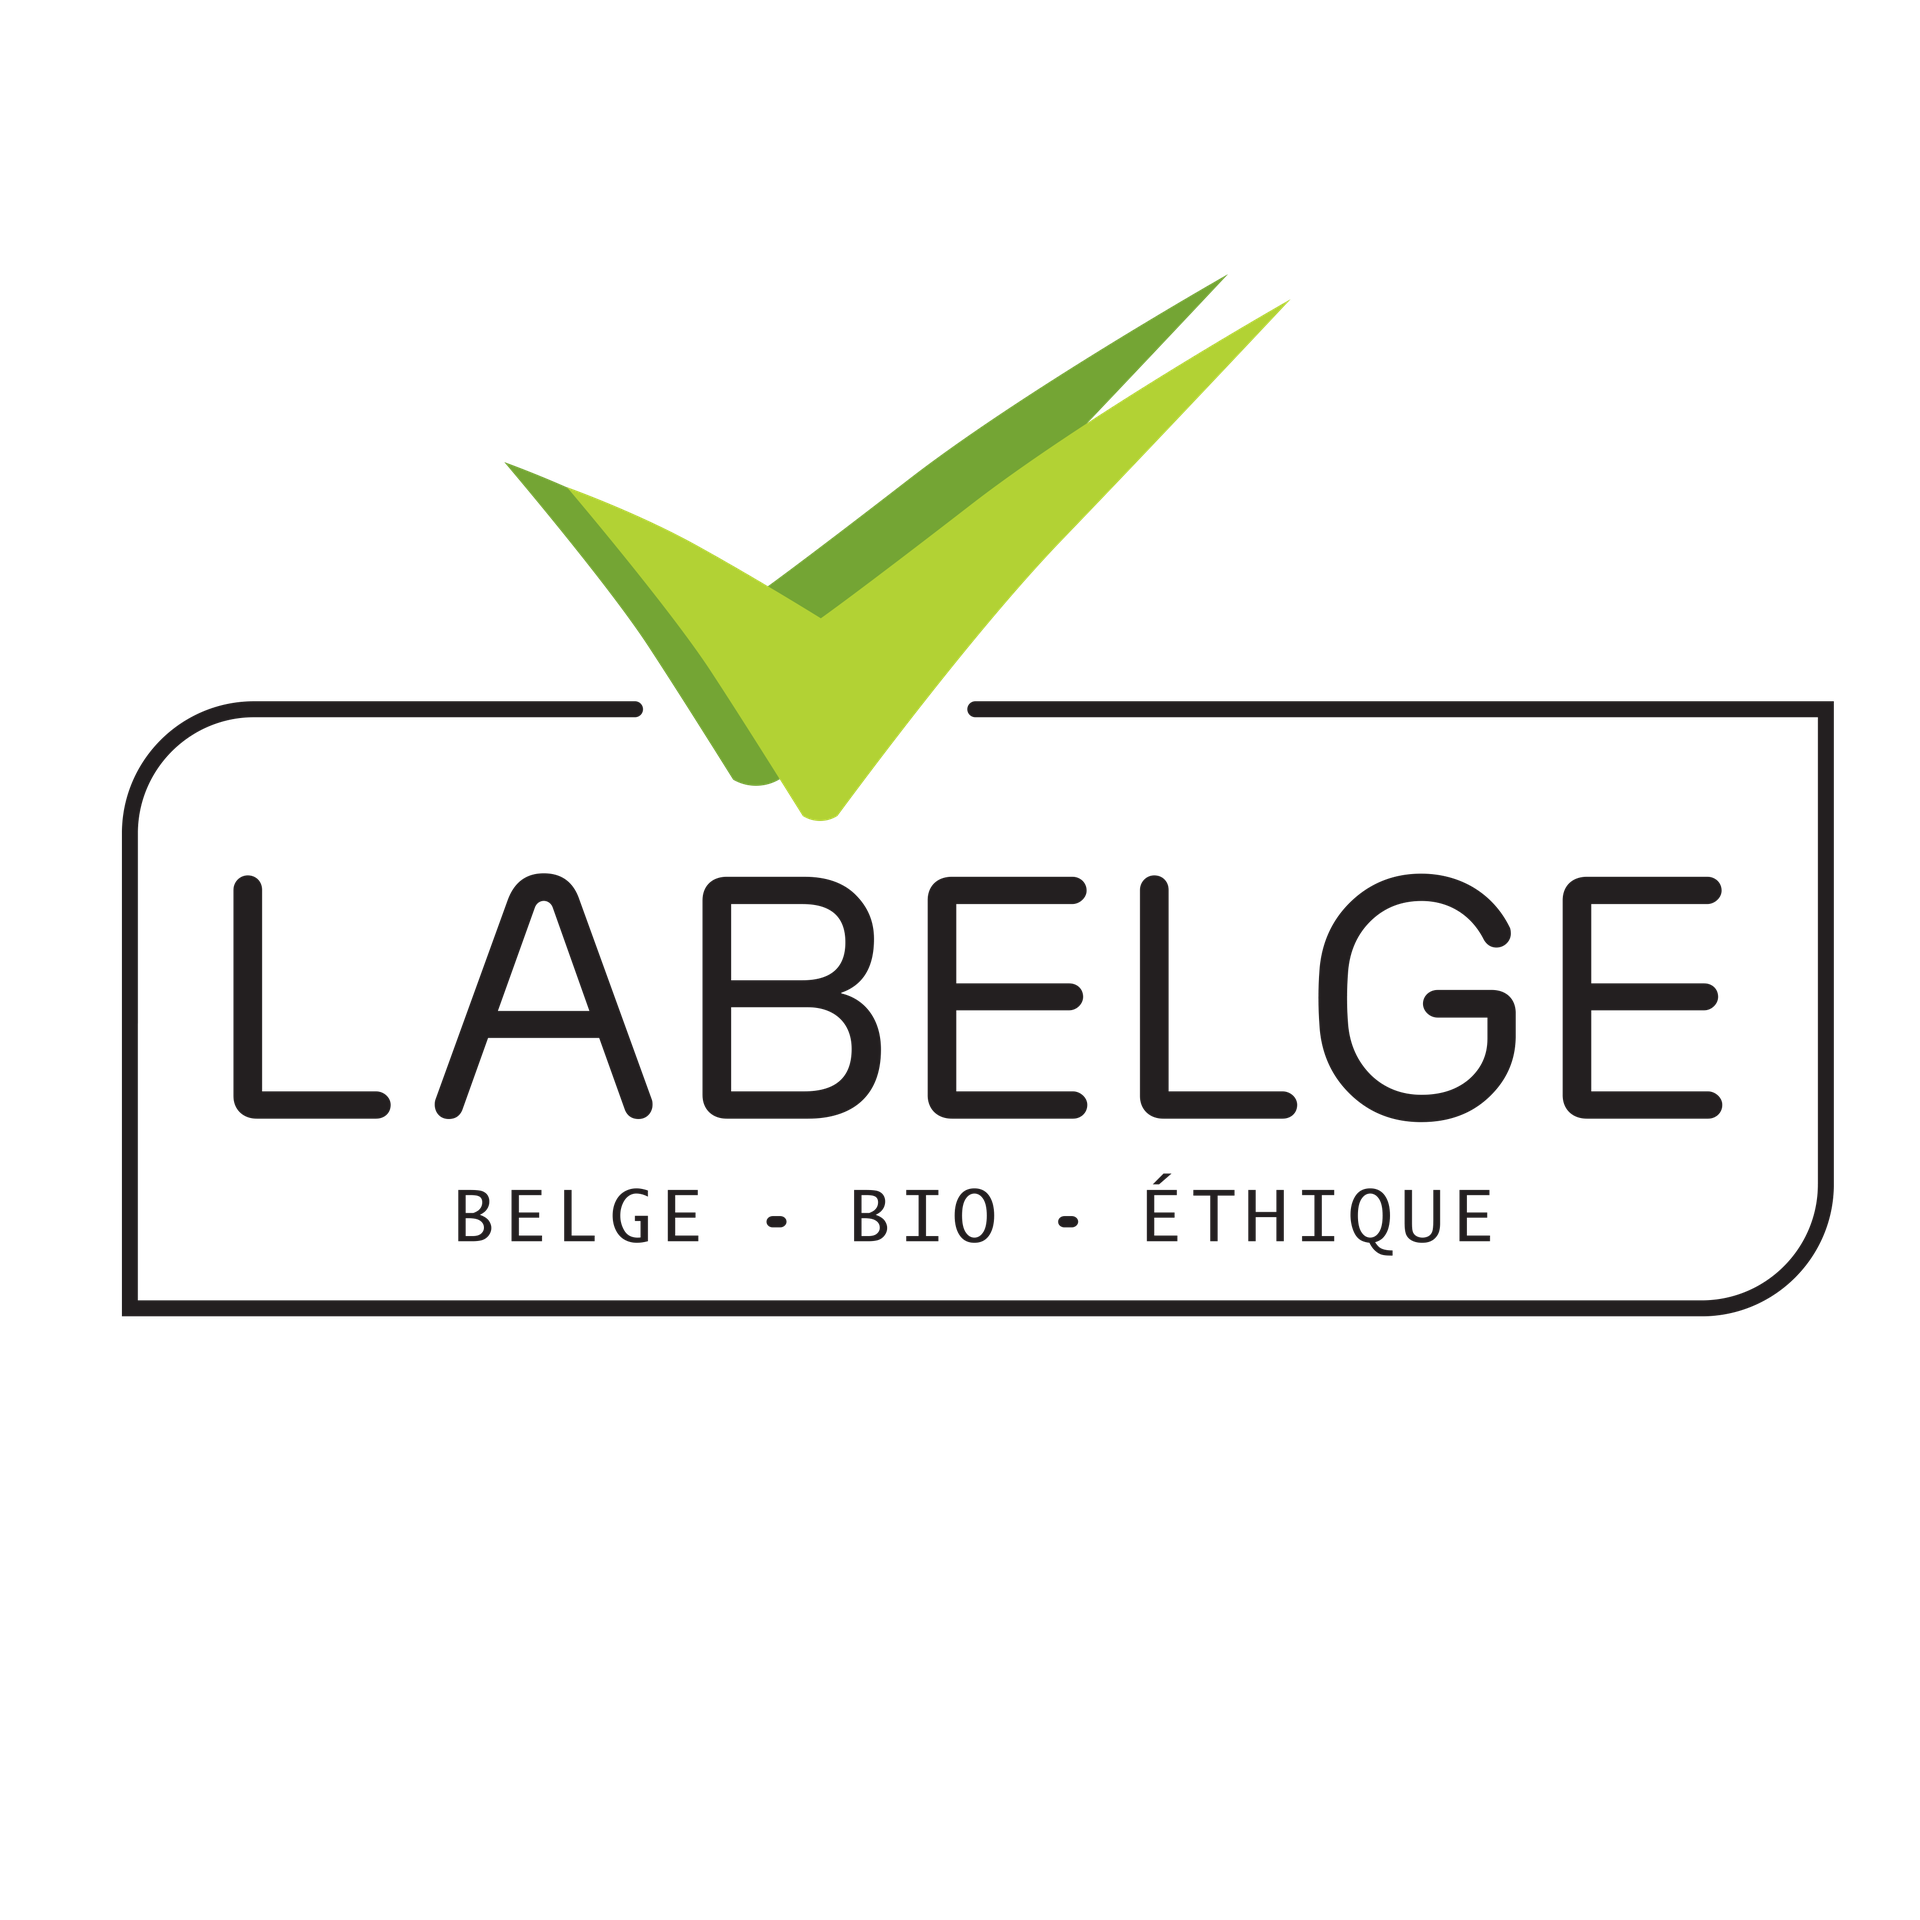 Labelge